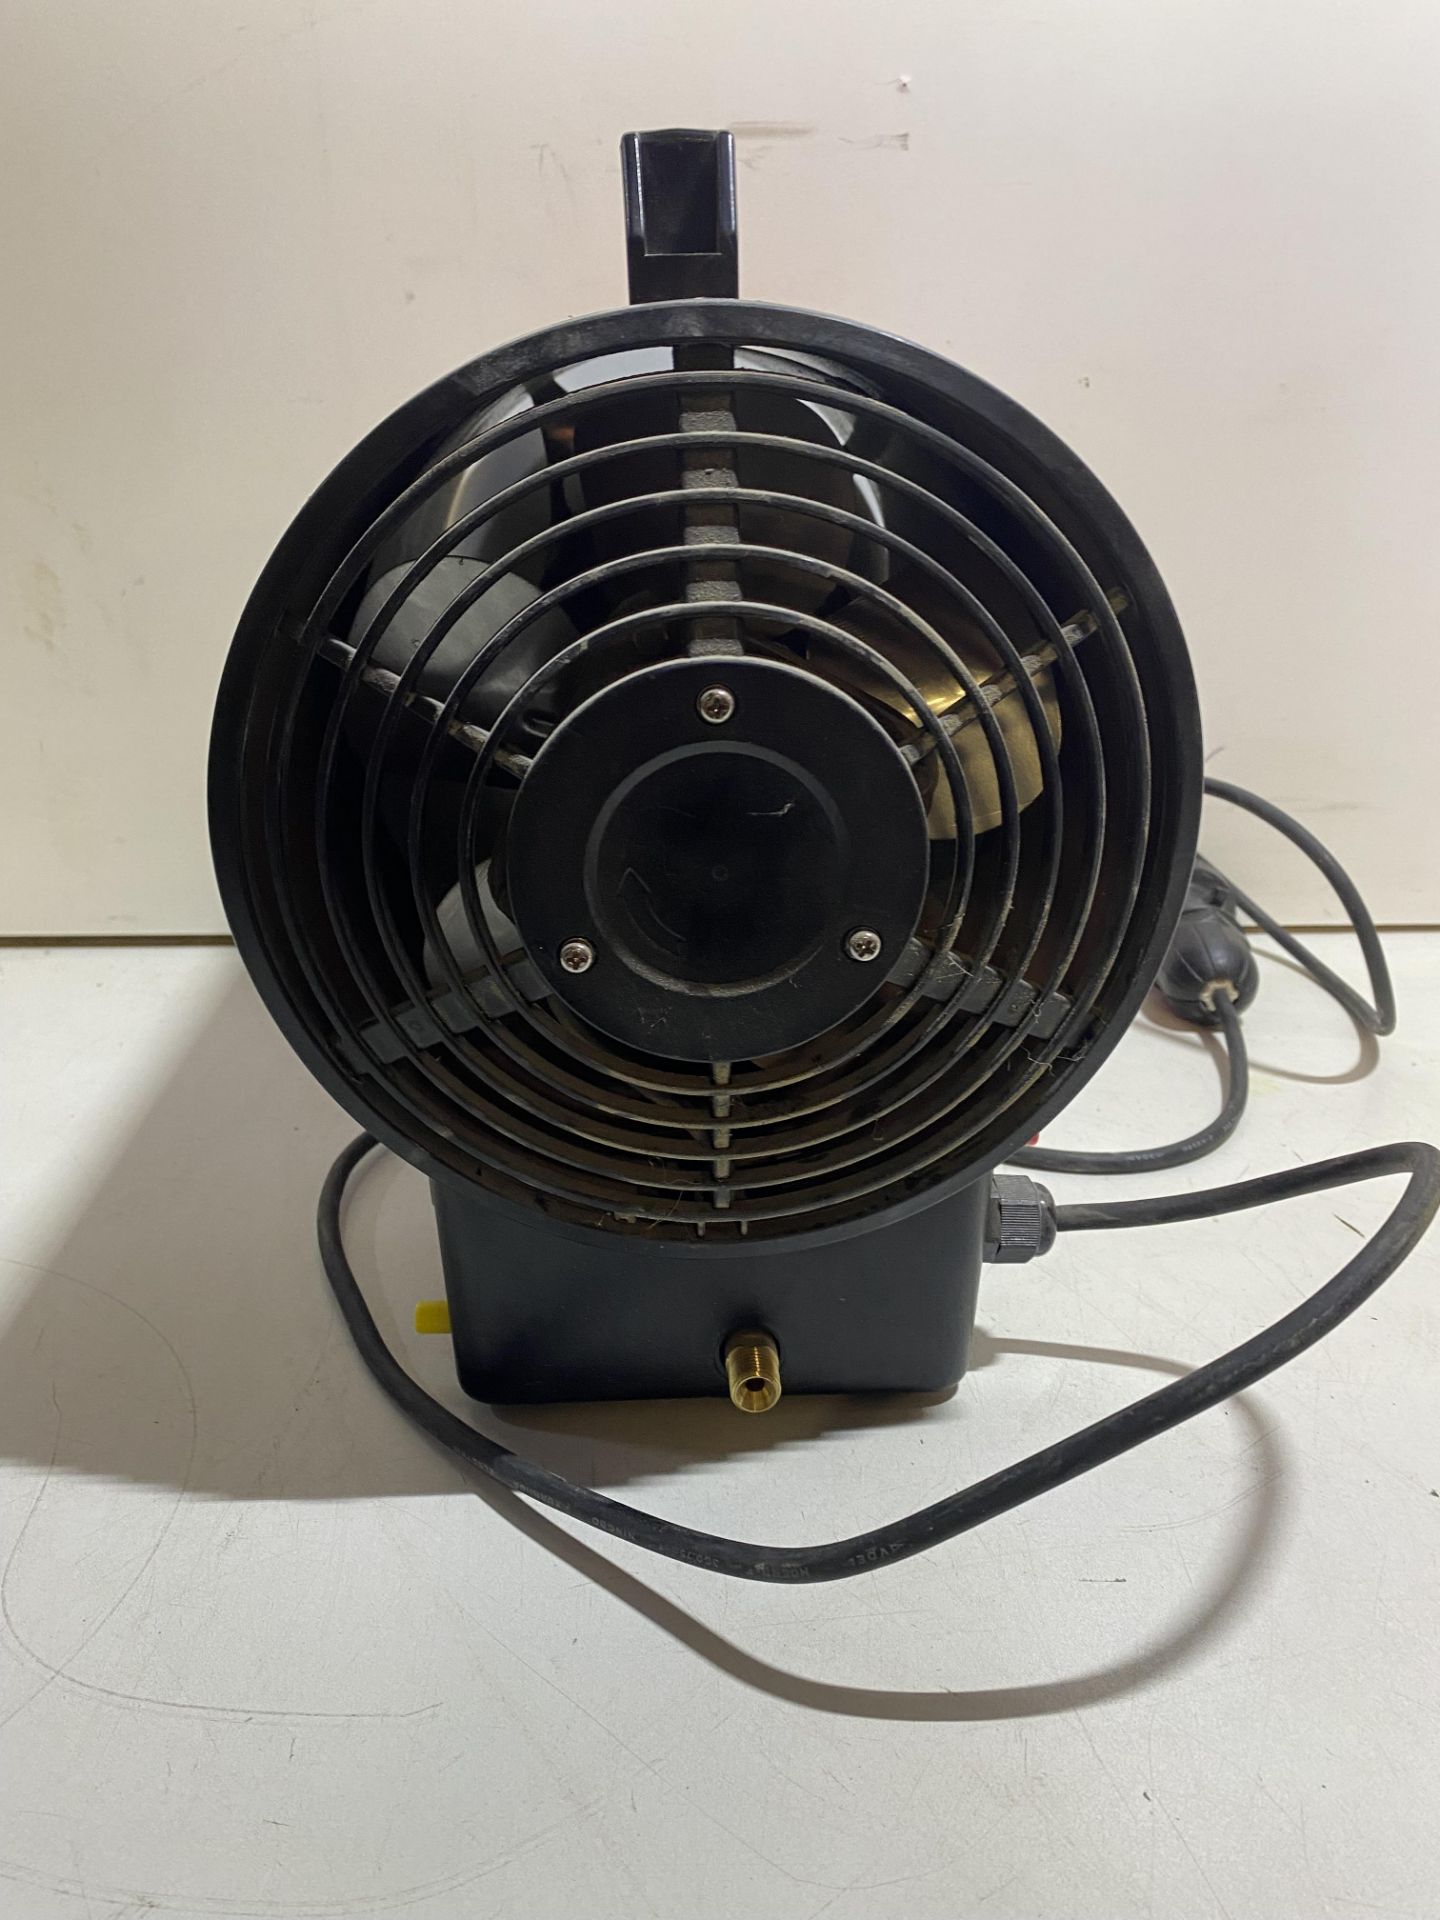 Marko 10KW Propane/LPG Gas Space Heater Electric Fan Assisted Powerful Workshop Heat - Image 4 of 5